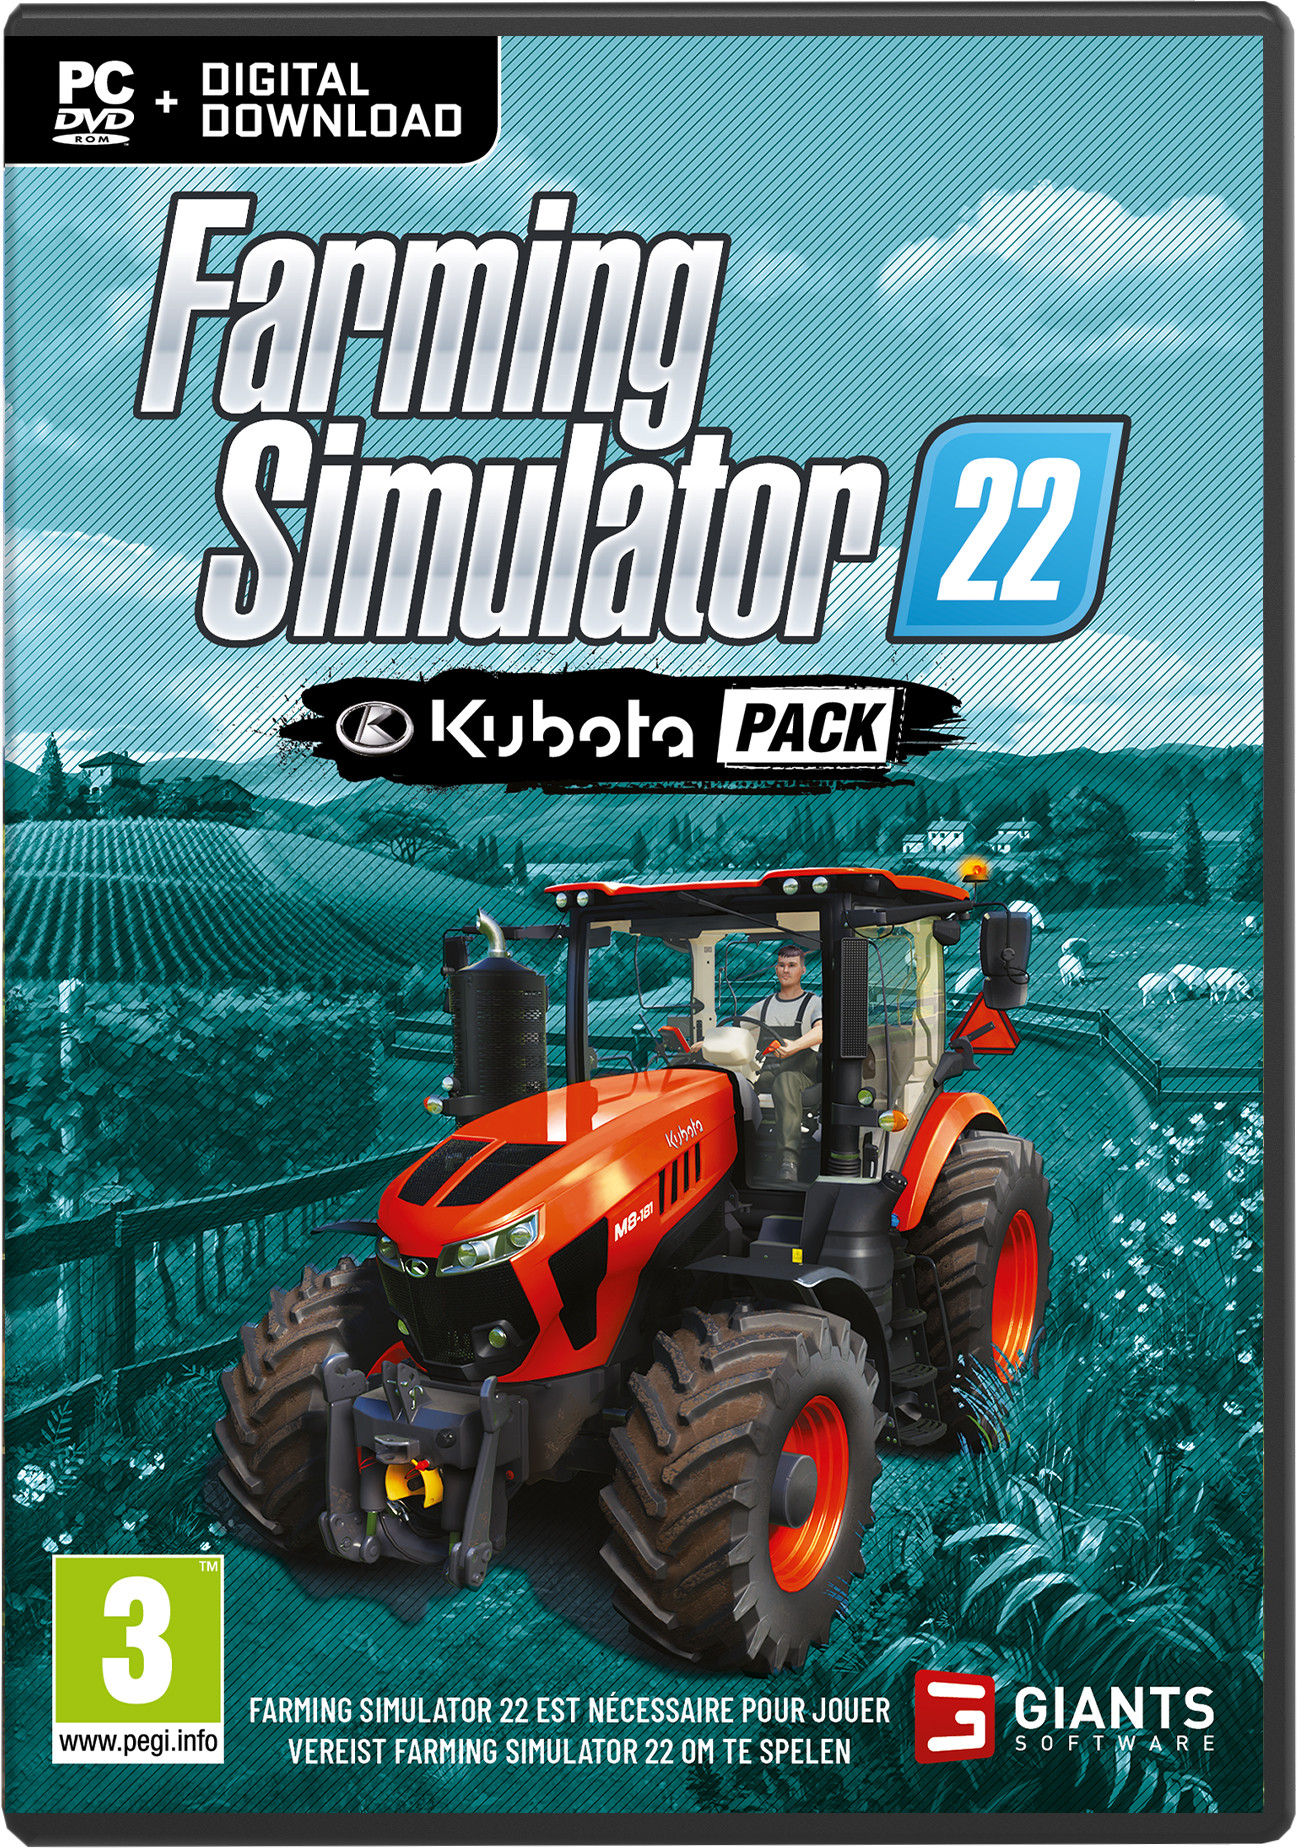 plaion Farming Simulator 22 - KUBOTA Expansion Pack - Windows - Simulator - PEGI 3